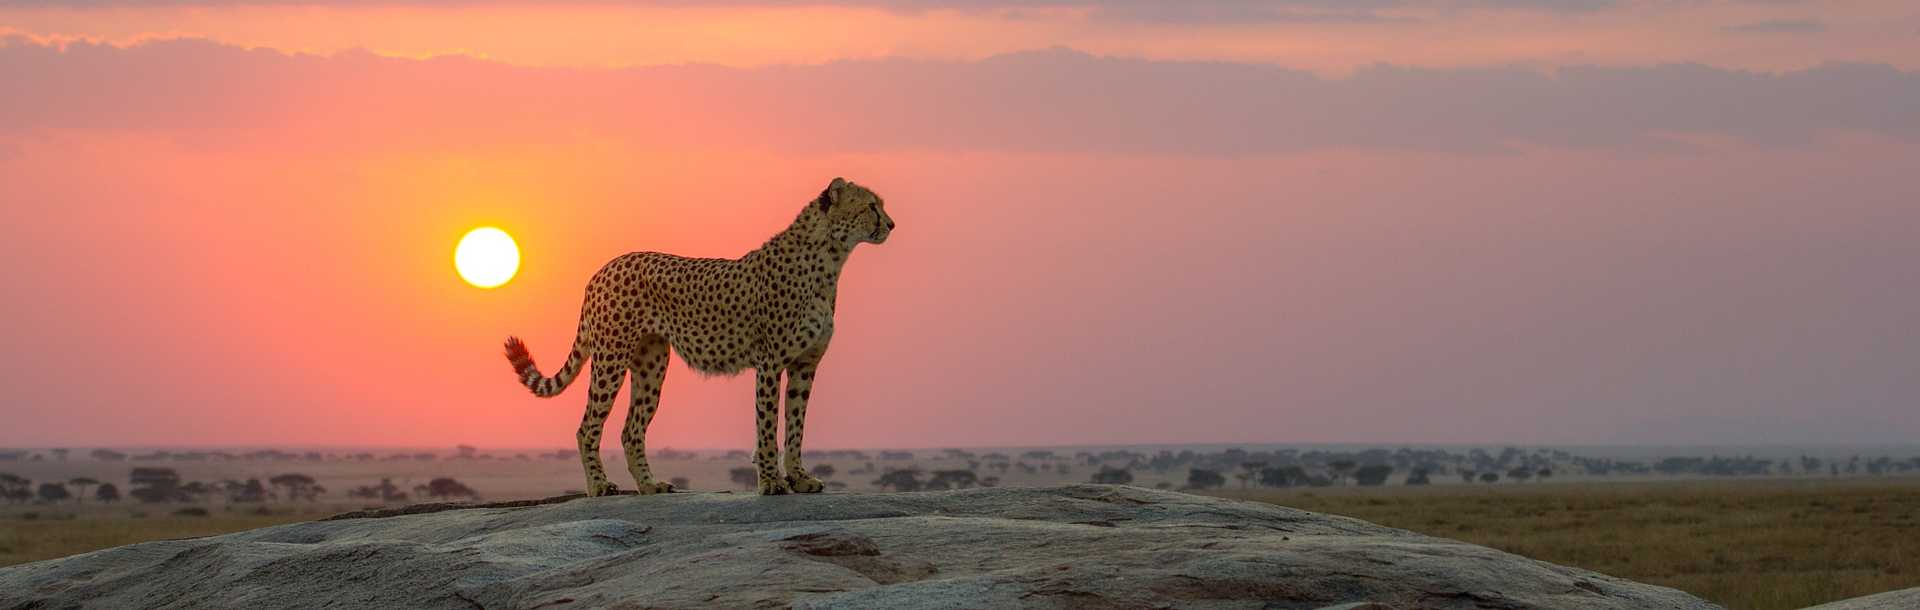 Cheetah on the savanna in Kenya at sunset